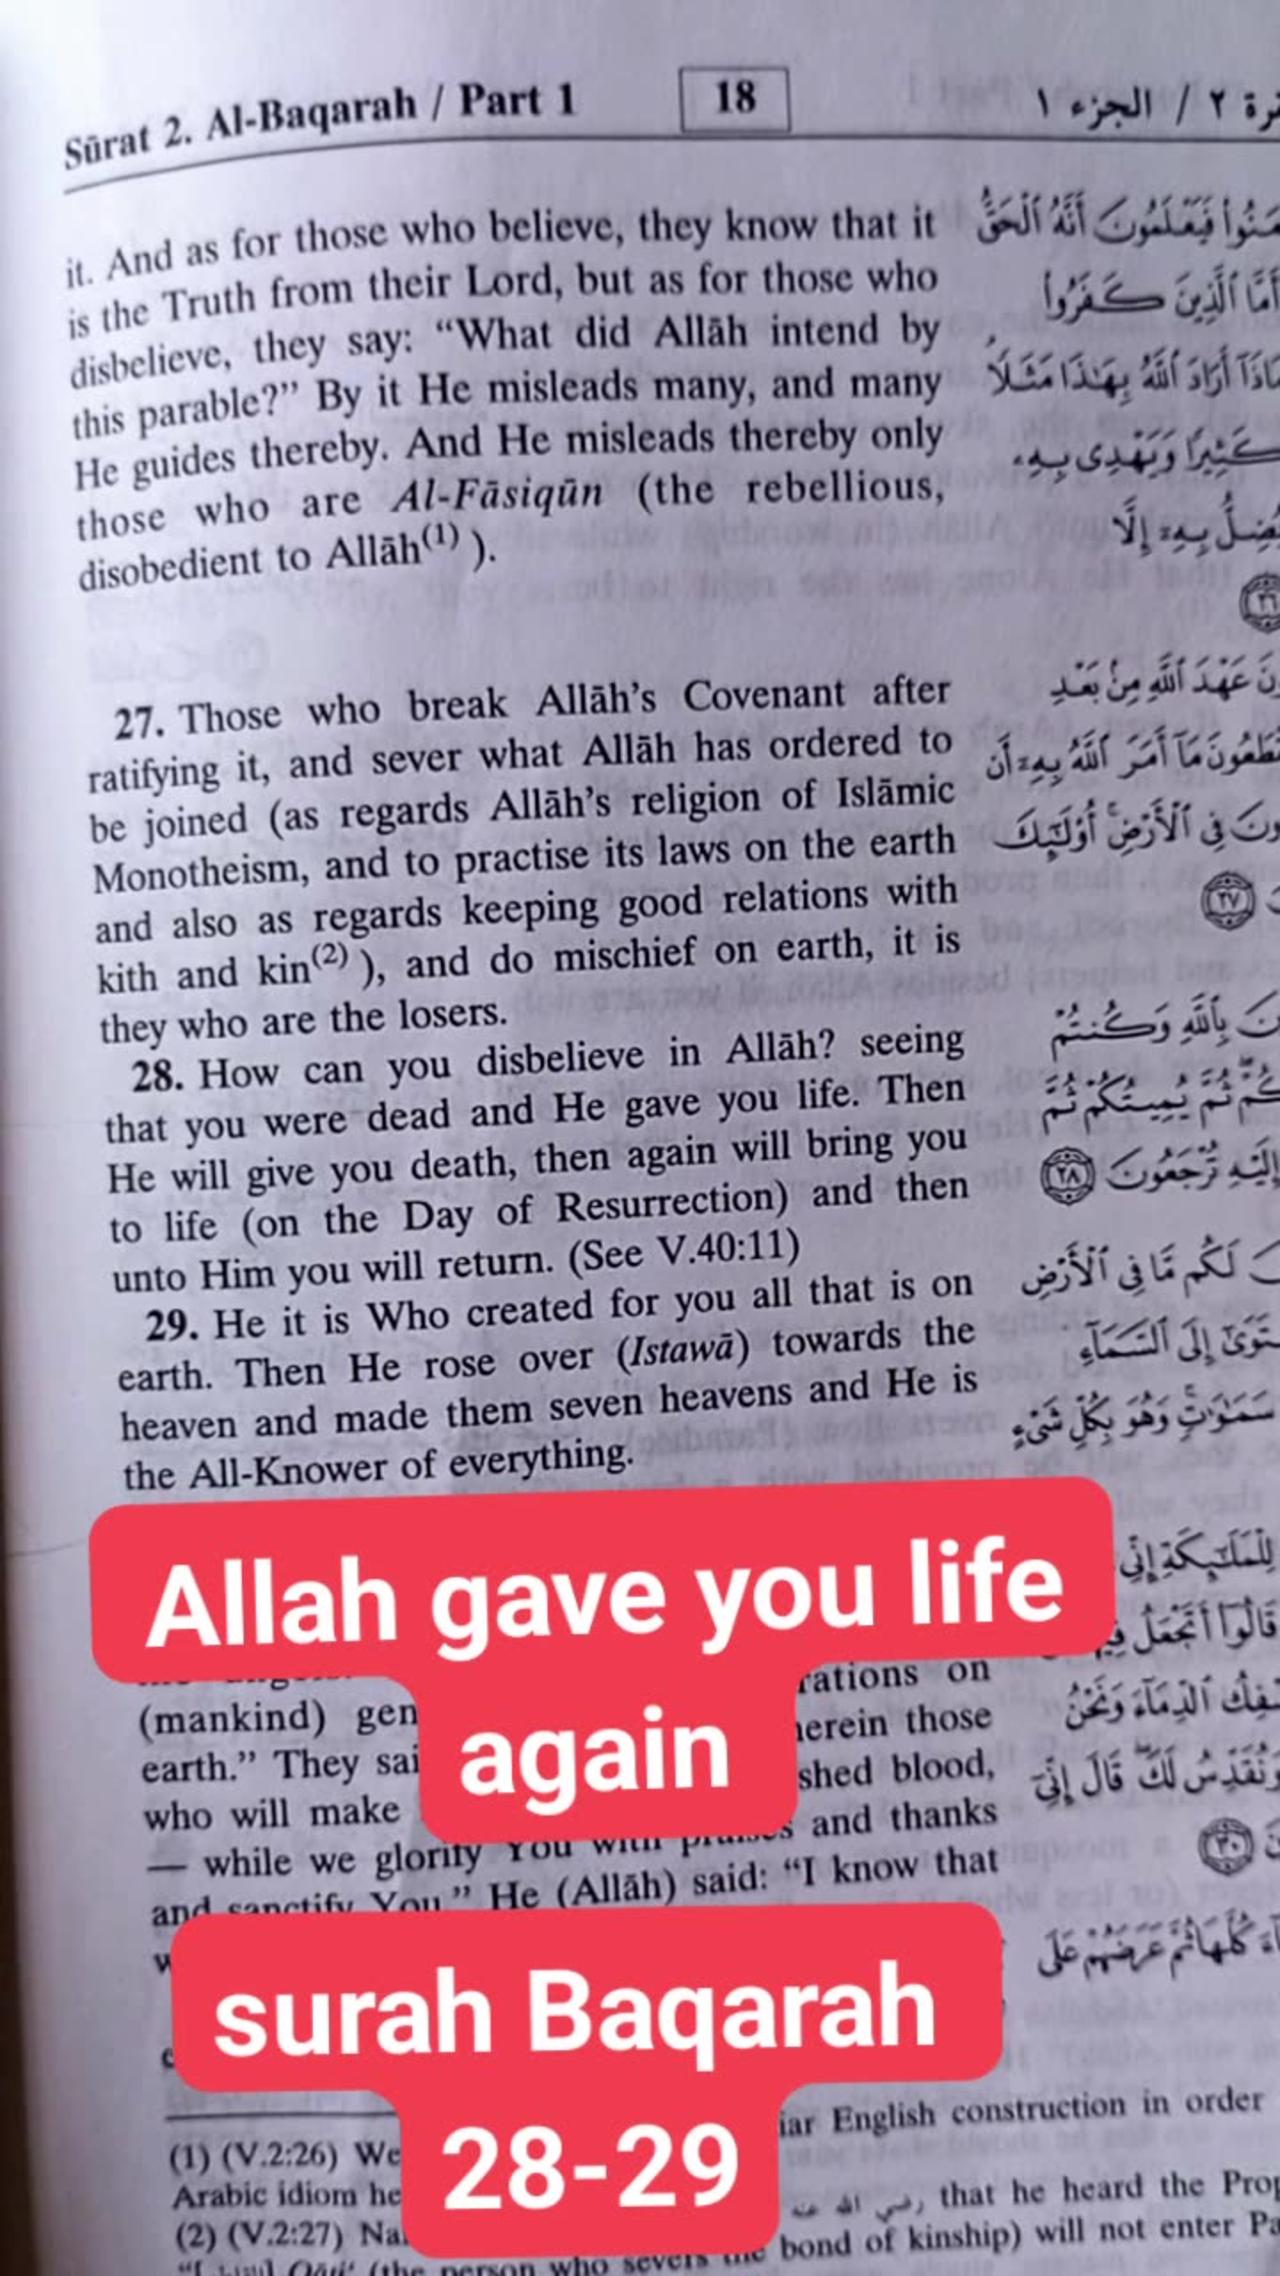 Allah gave you a life again